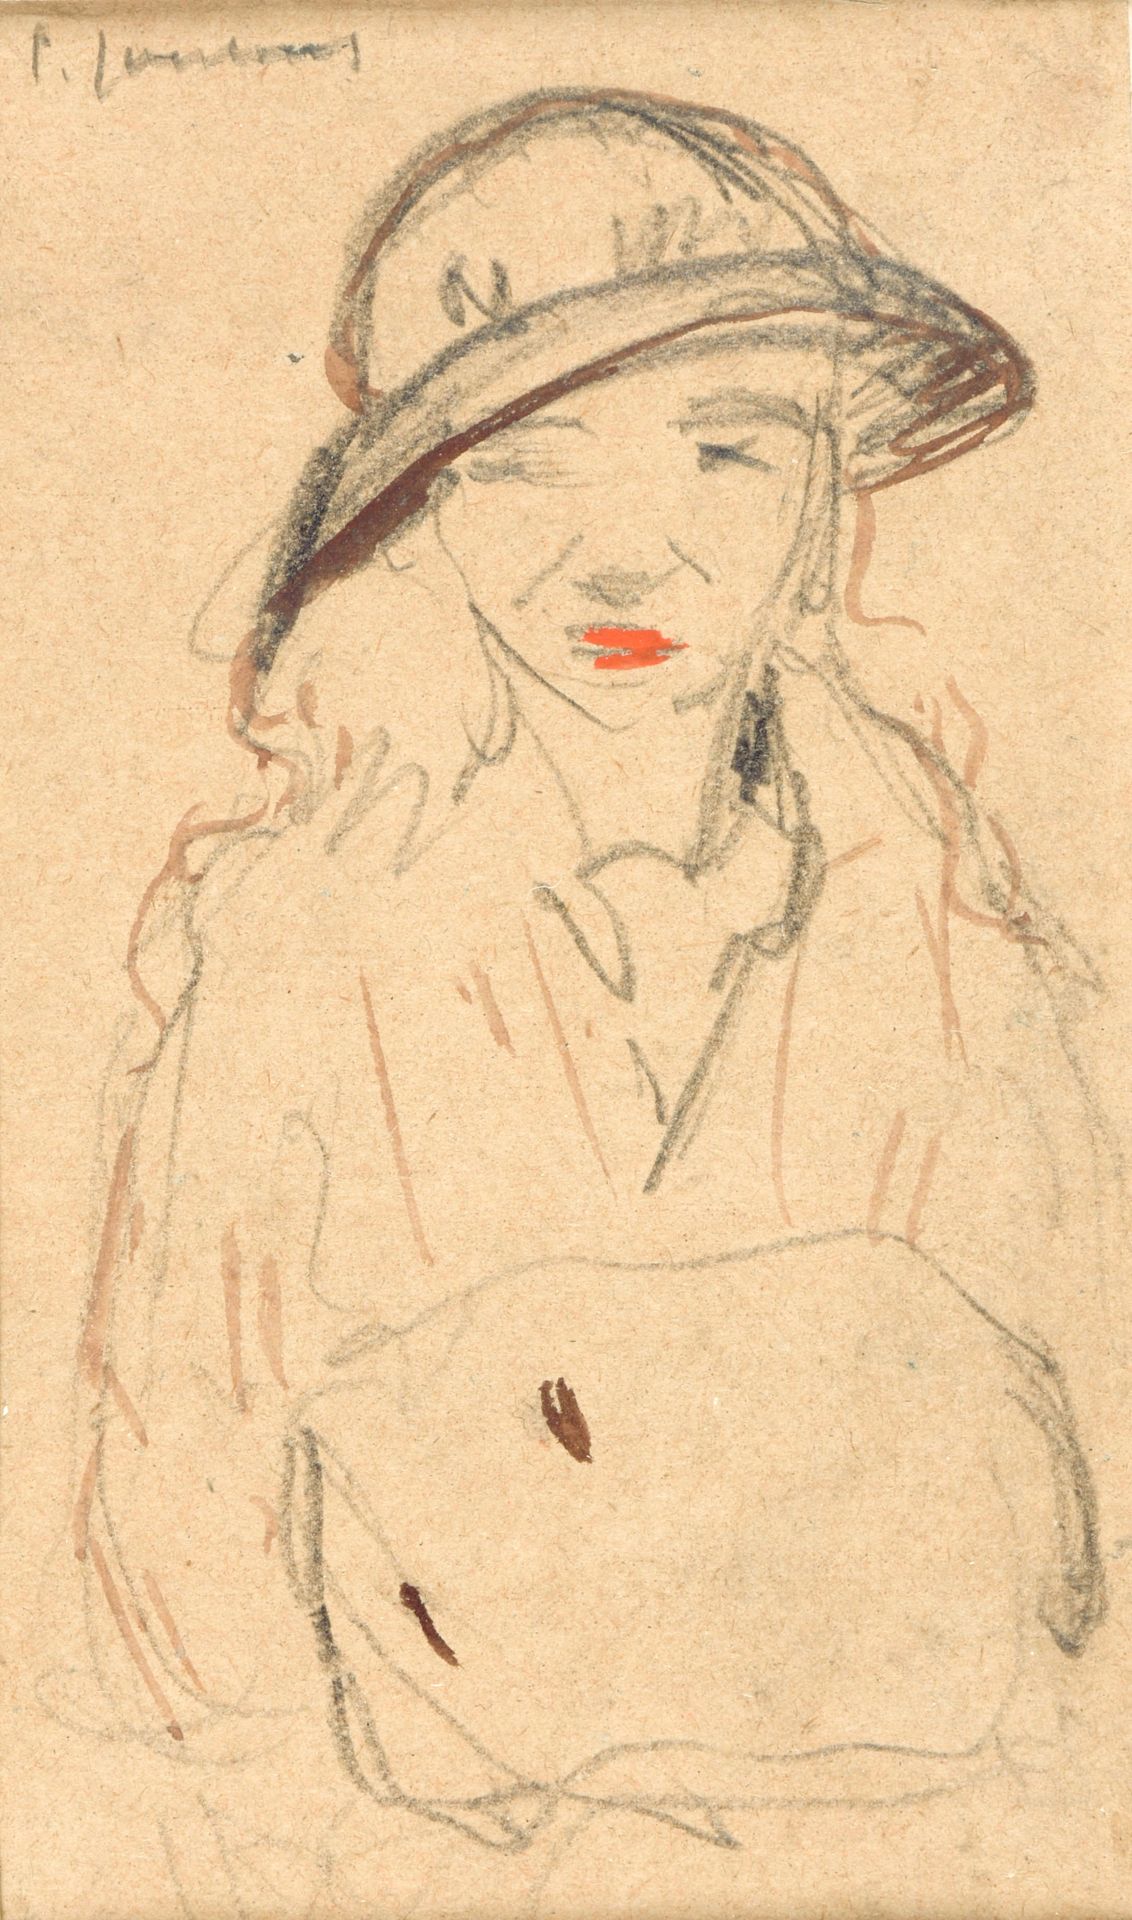 JOOSTENS, Paul (1889-1960) 基金会

水彩画(13.5 x 12 cm)，从右到左。英格利希特